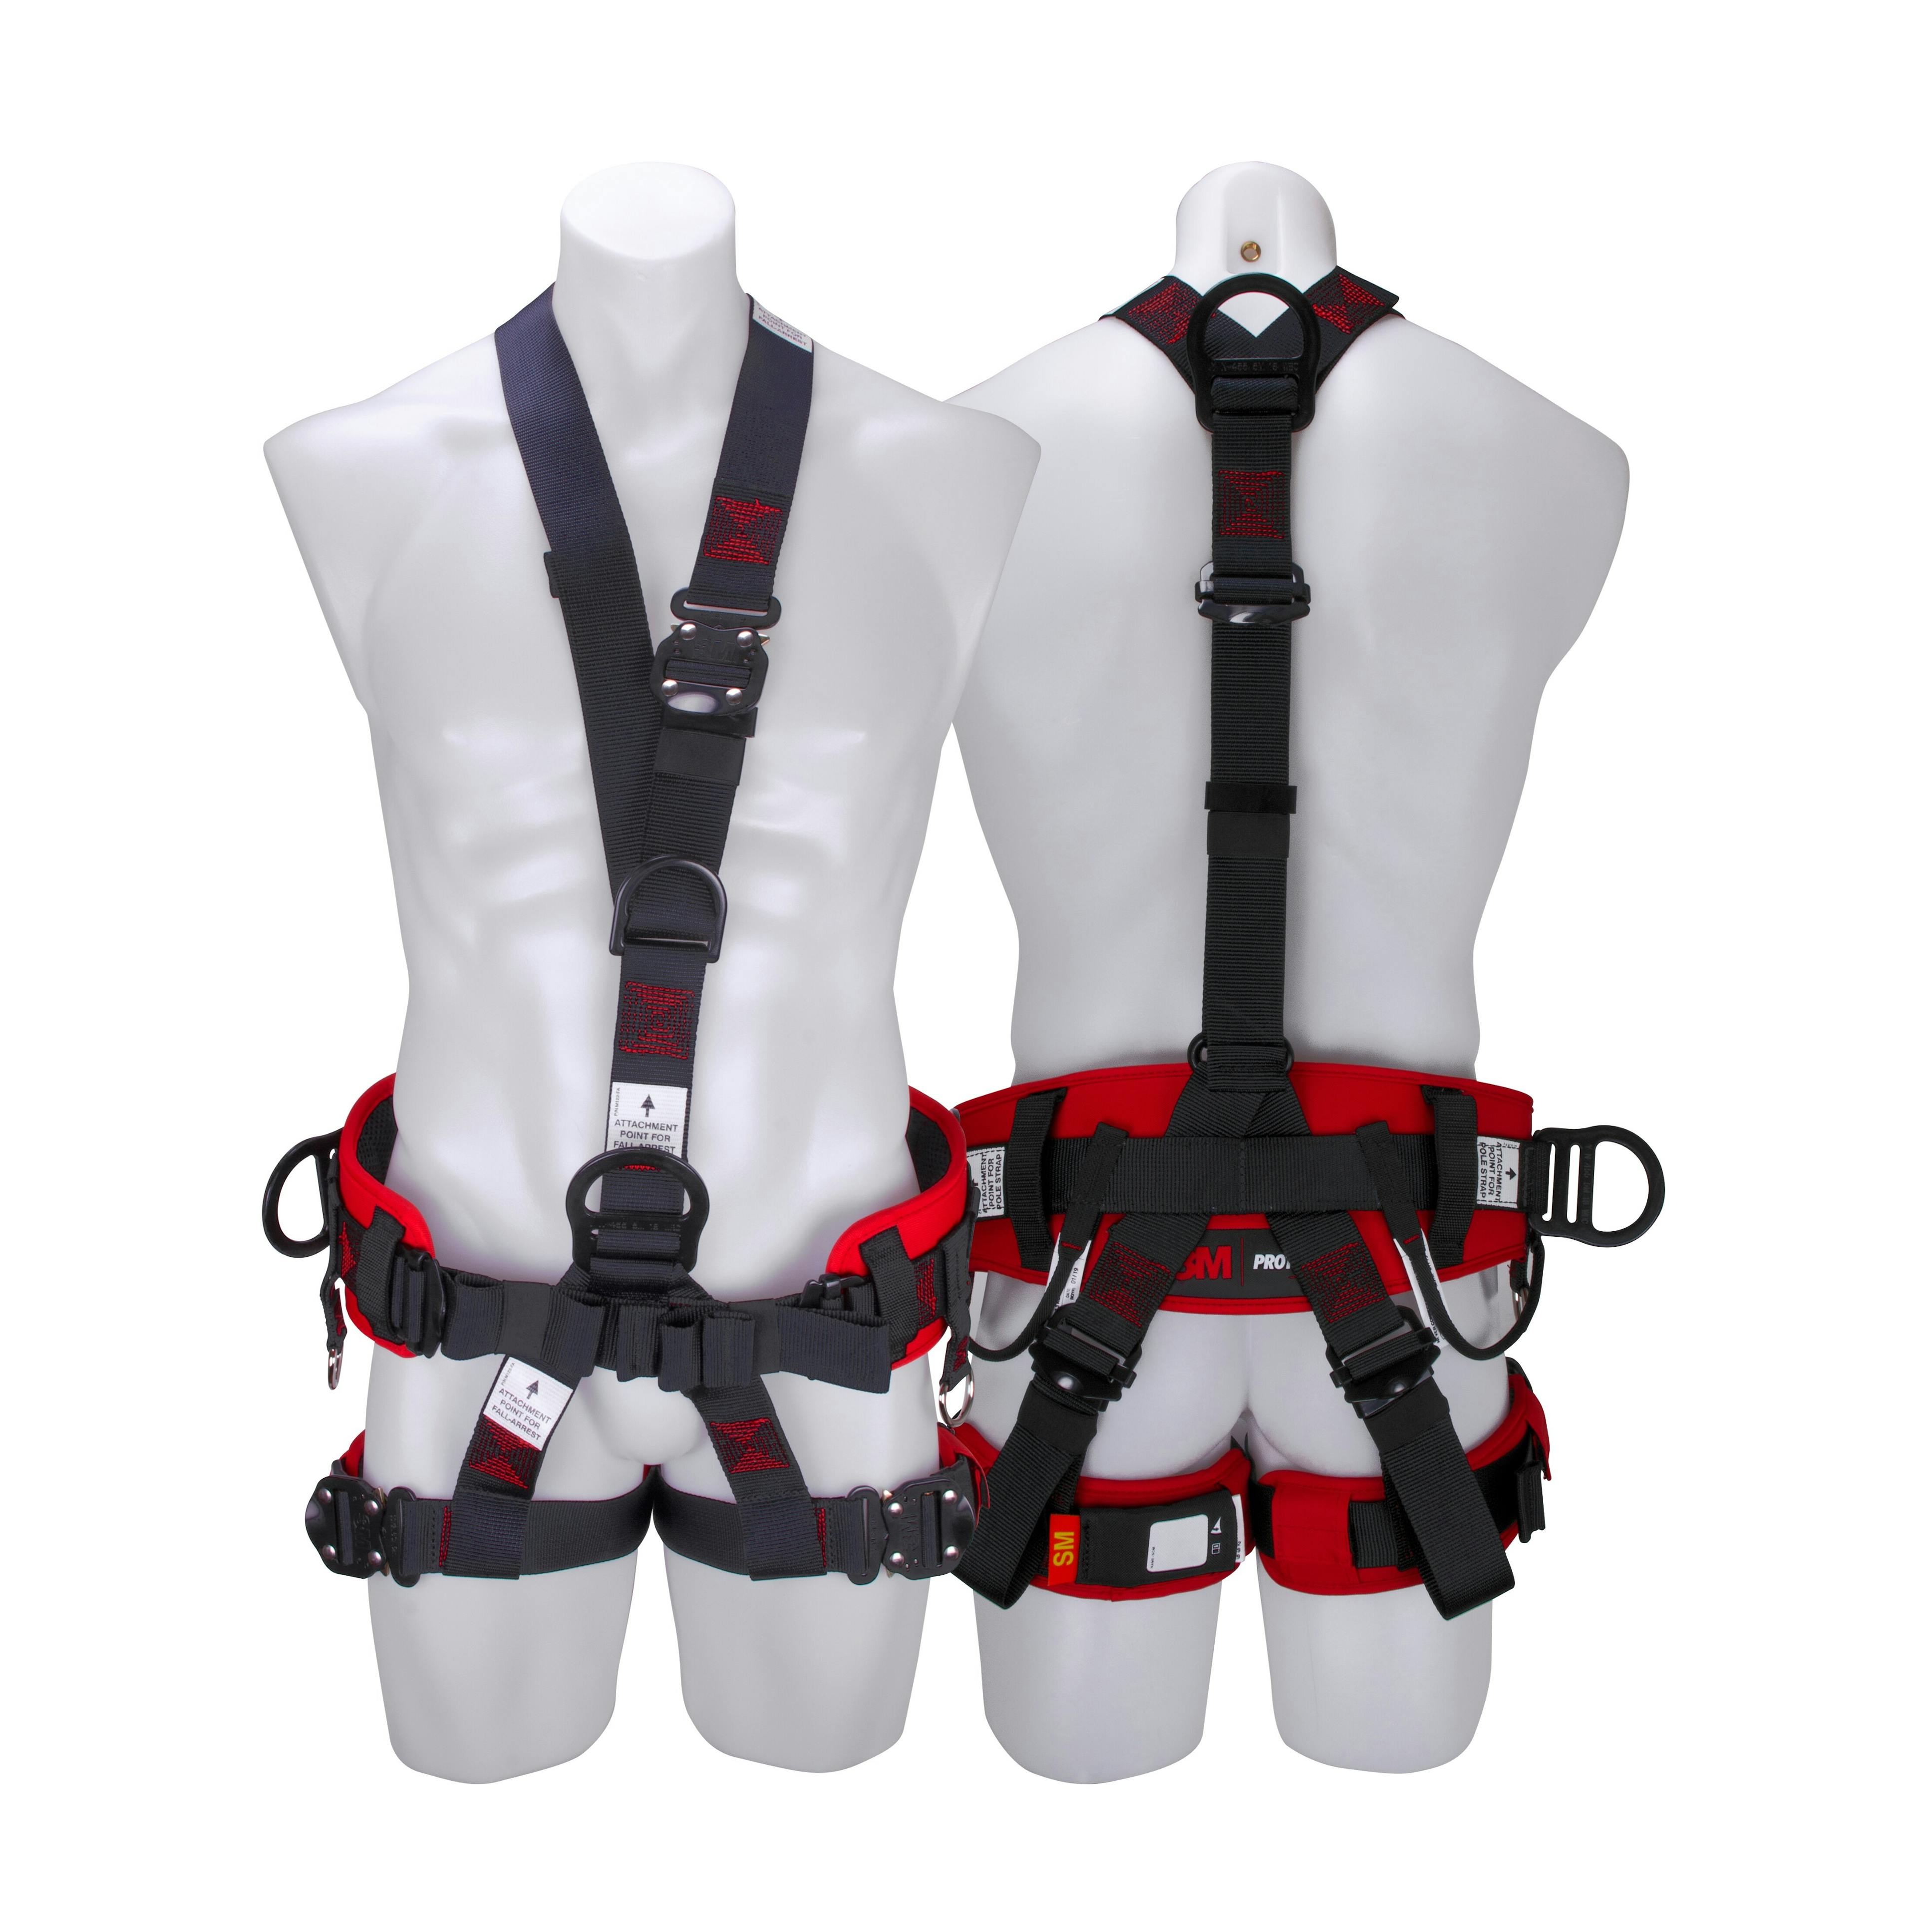 3M™ PROTECTA® X Suspension Harness 1161713, Red and Black, Medium, 1 EA/Case